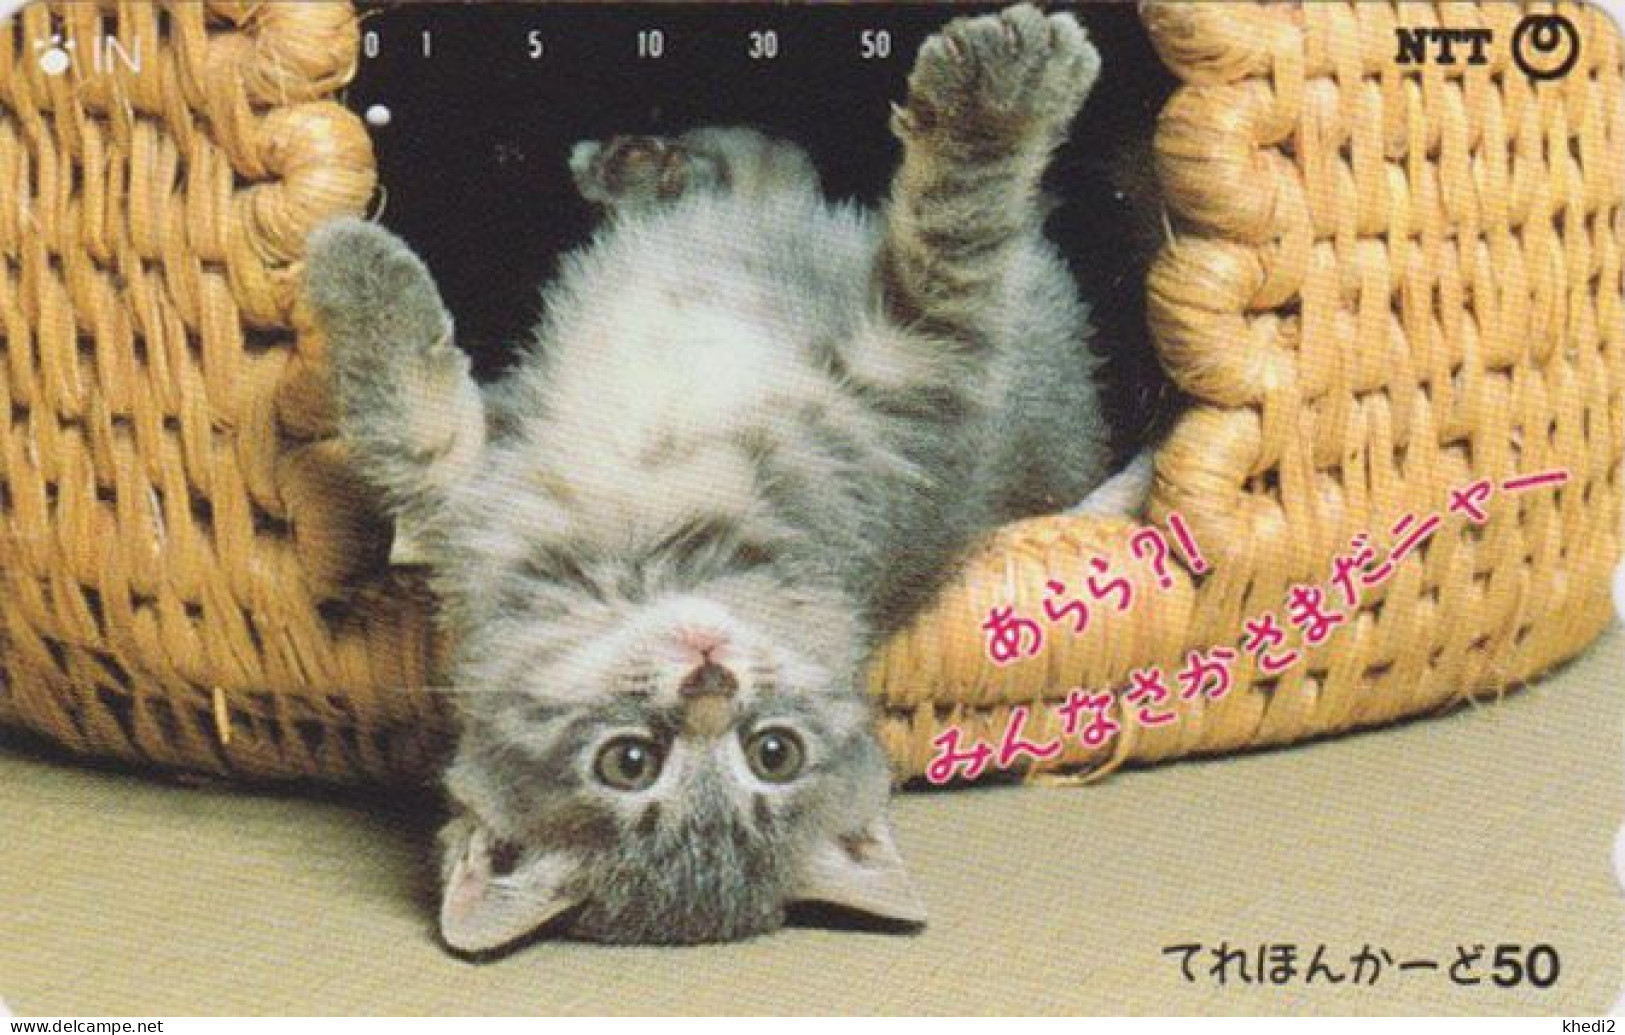 Télécarte JAPON / NTT 251-001 B ** 2 NOTCHES 1 PUNCH ** - ANIMAL CHAT - CAT JAPAN Phonecard - Katten